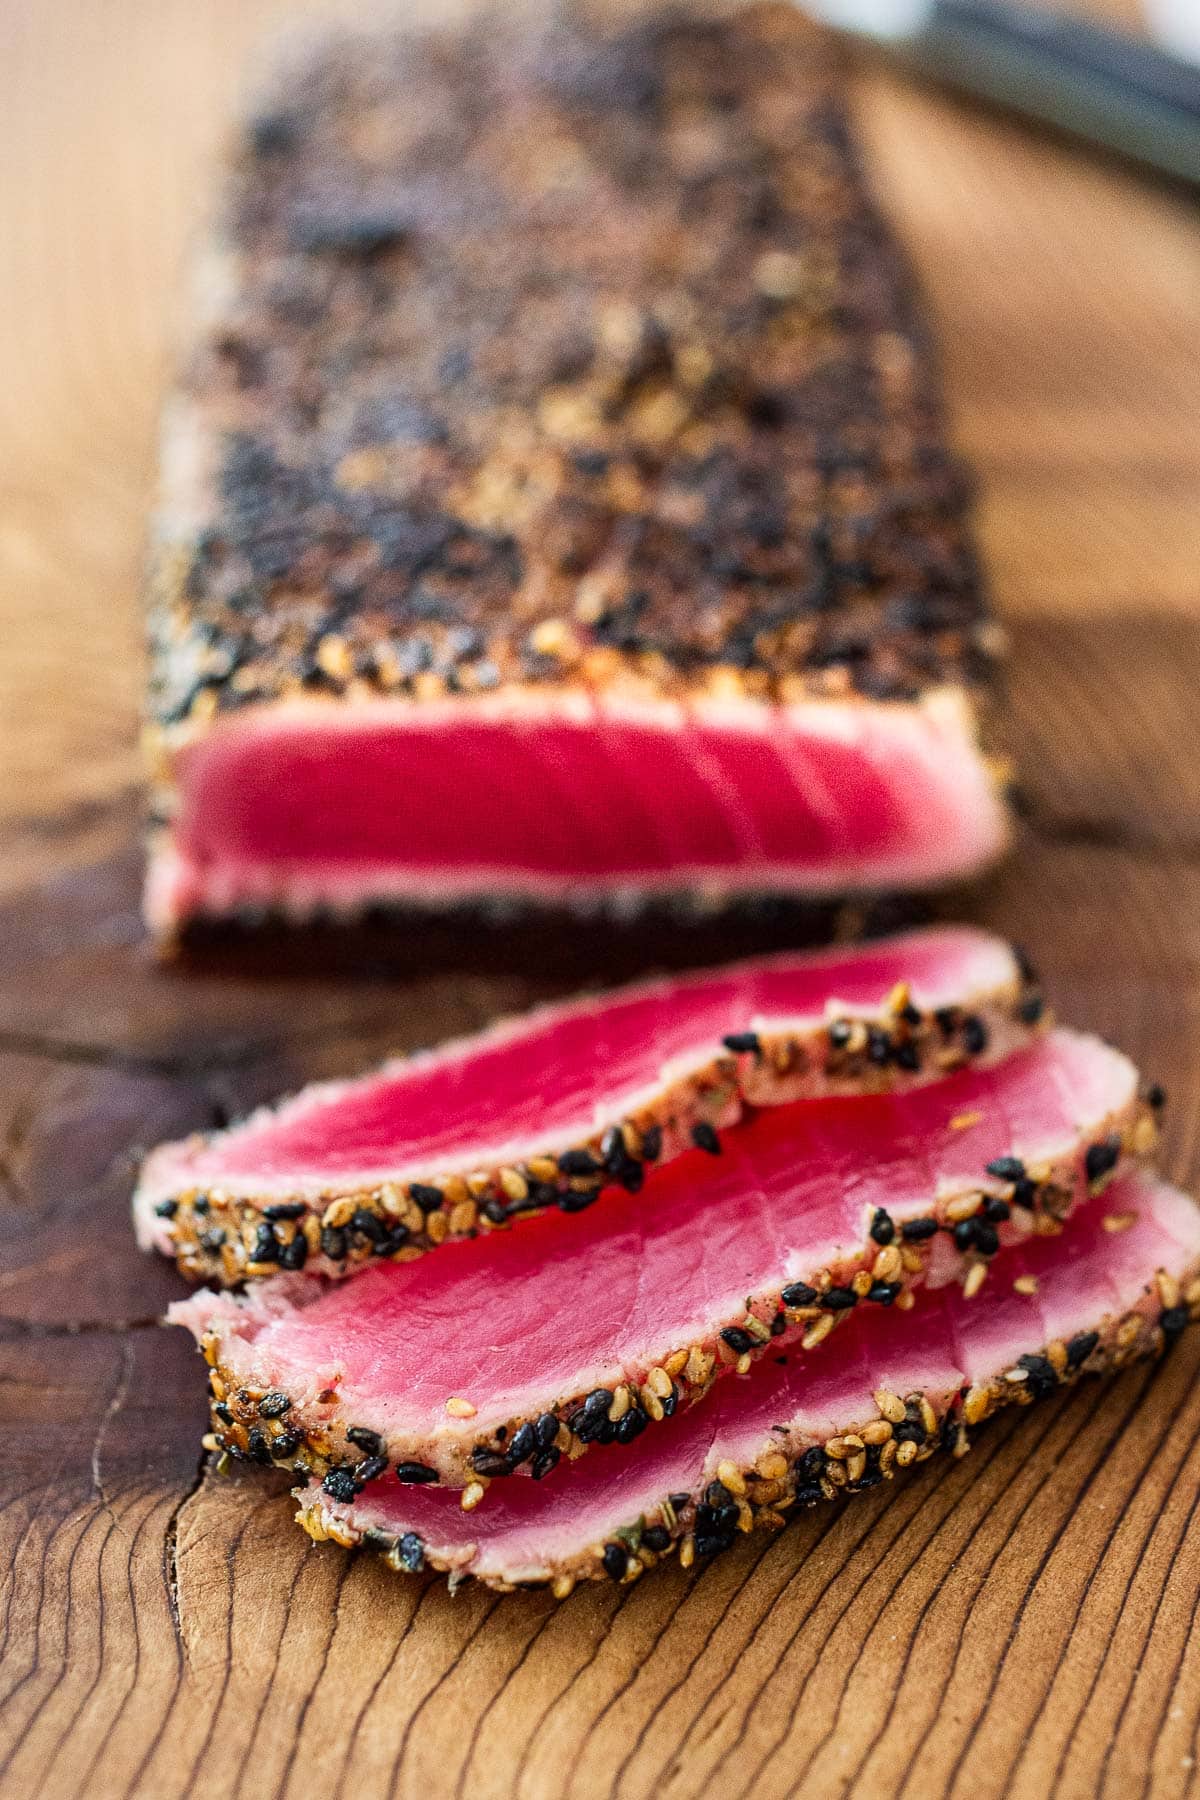 Seared tuna with a sesame seed crust.